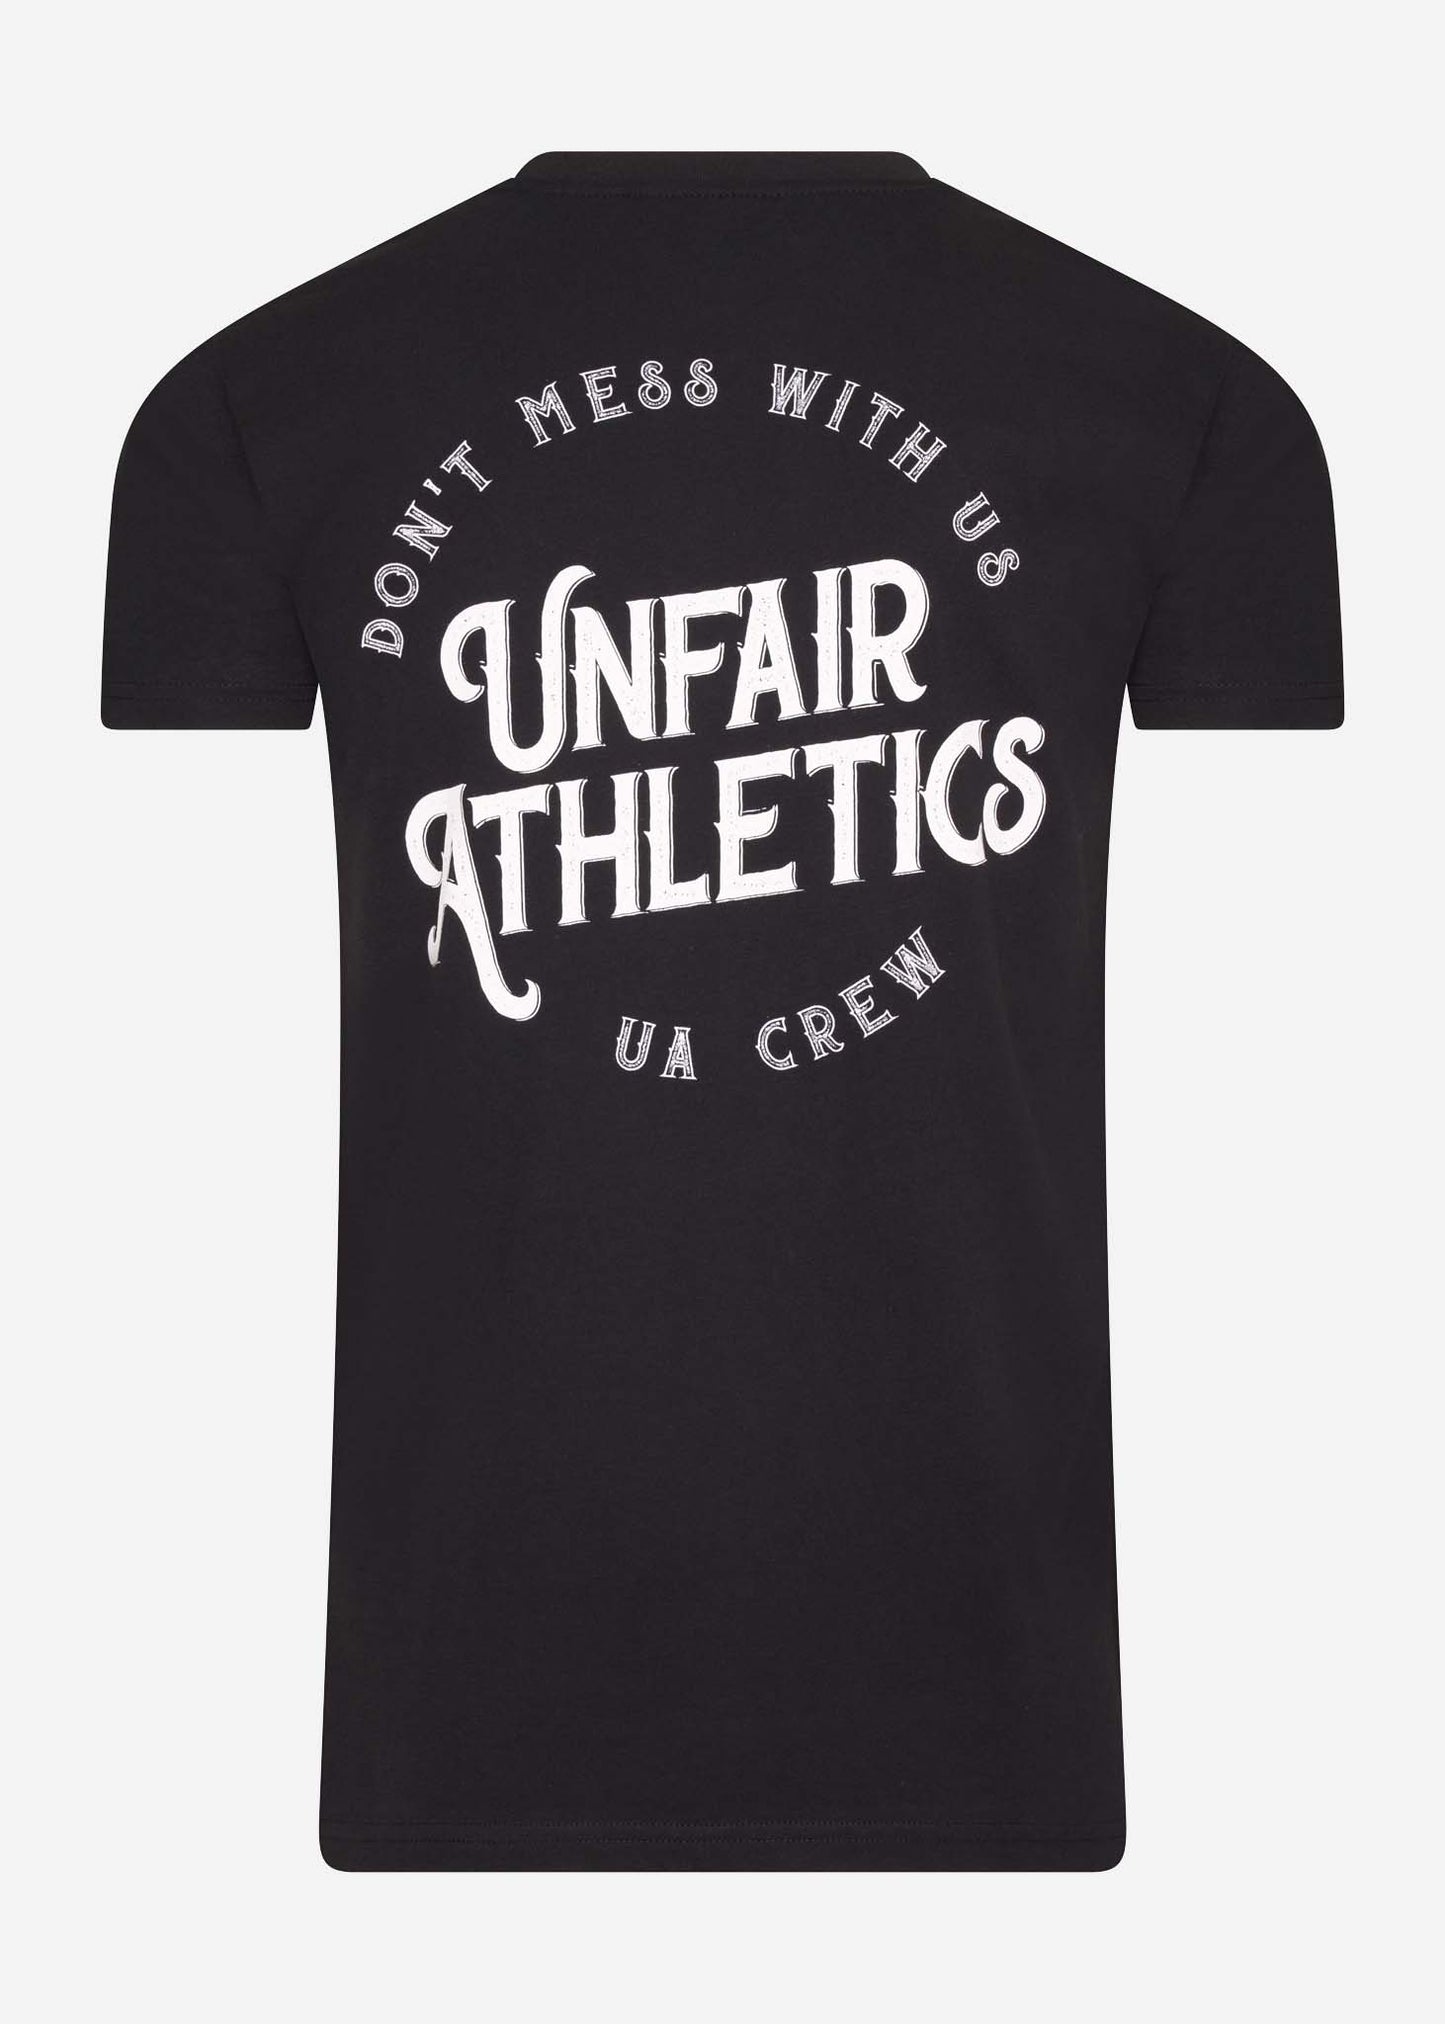 UA crew t-shirt - black